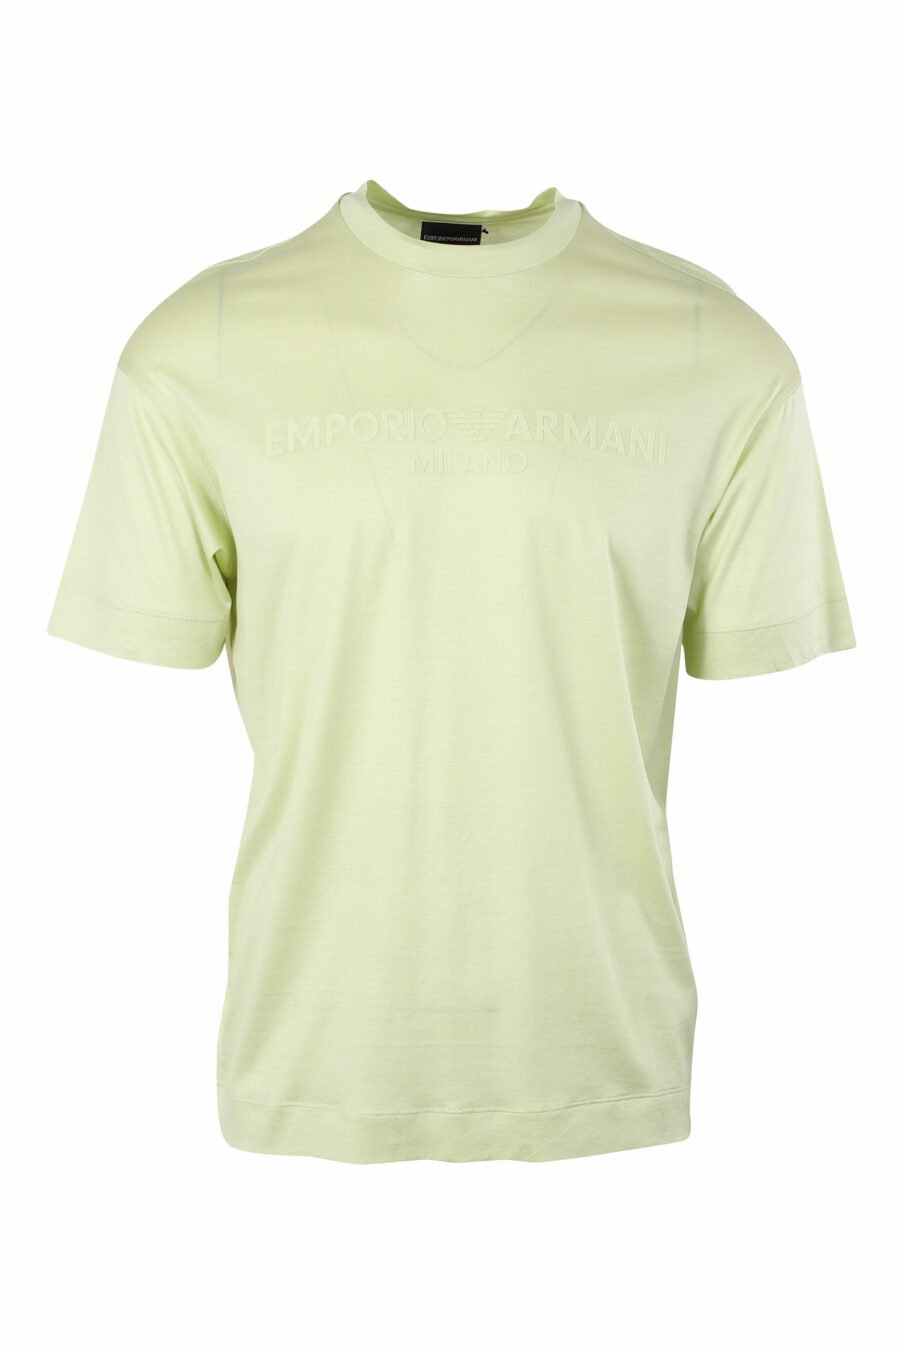 T-shirt vert avec maxilogo centré - IMG 9629